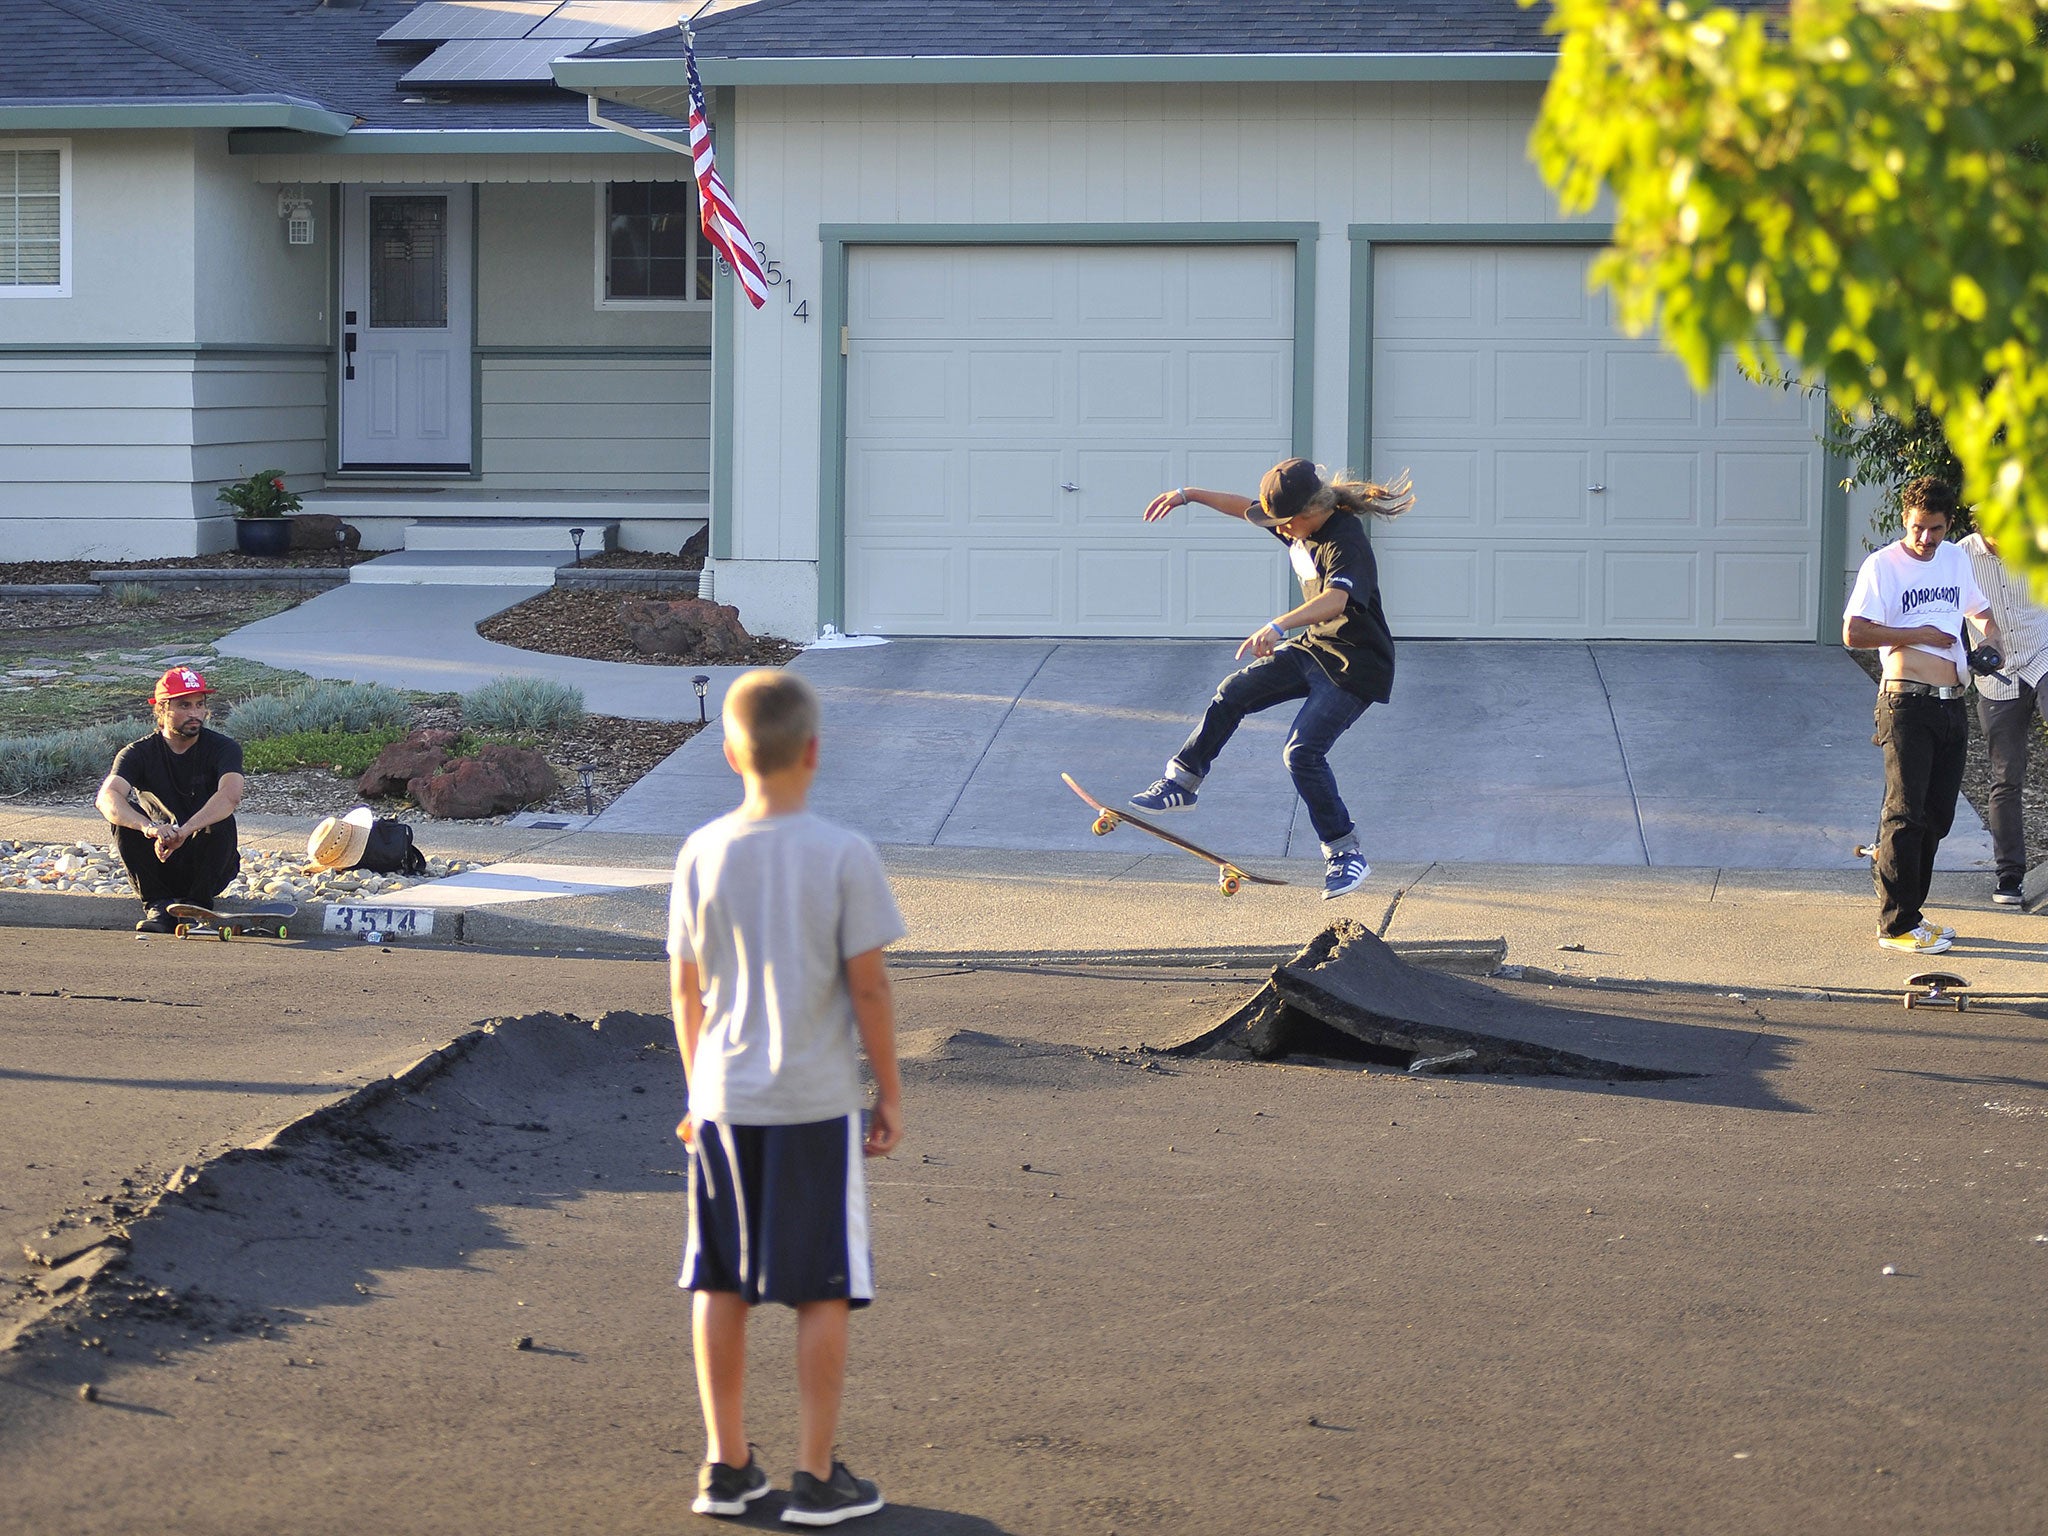 Kids skateboard over buckled roads in a residential neighborhood of Napa, California